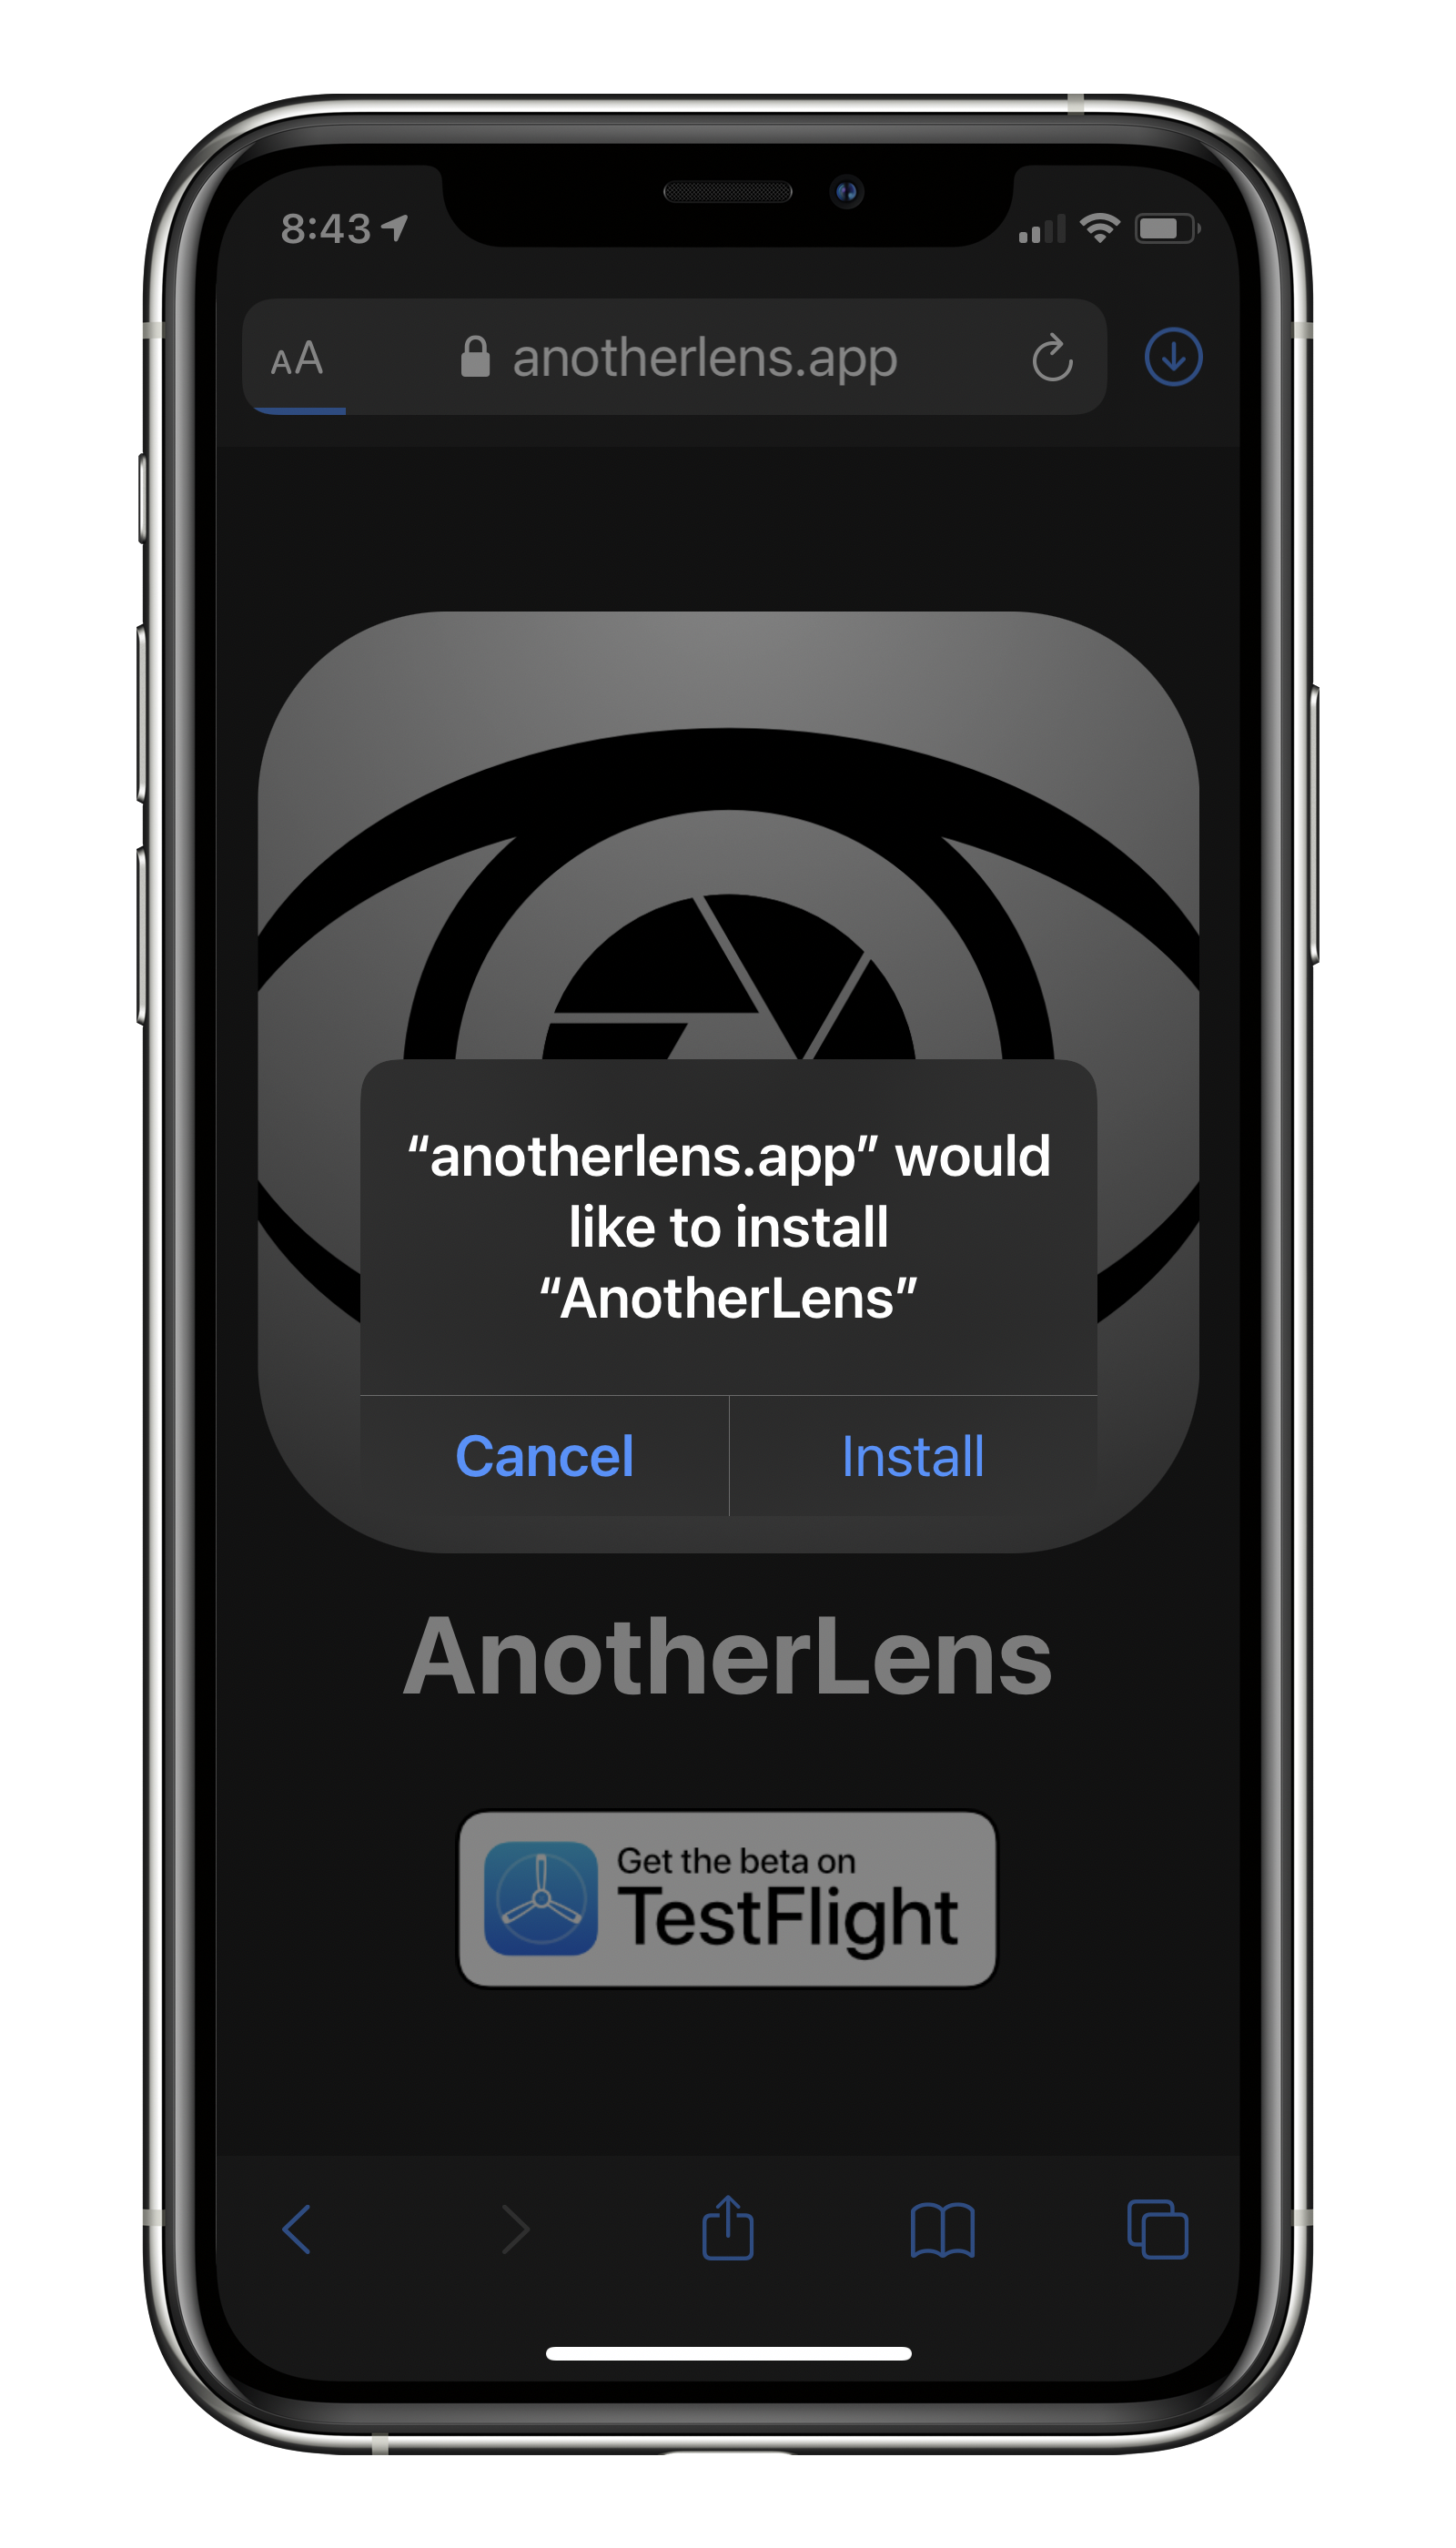 Installing my app AnotherLens via the web